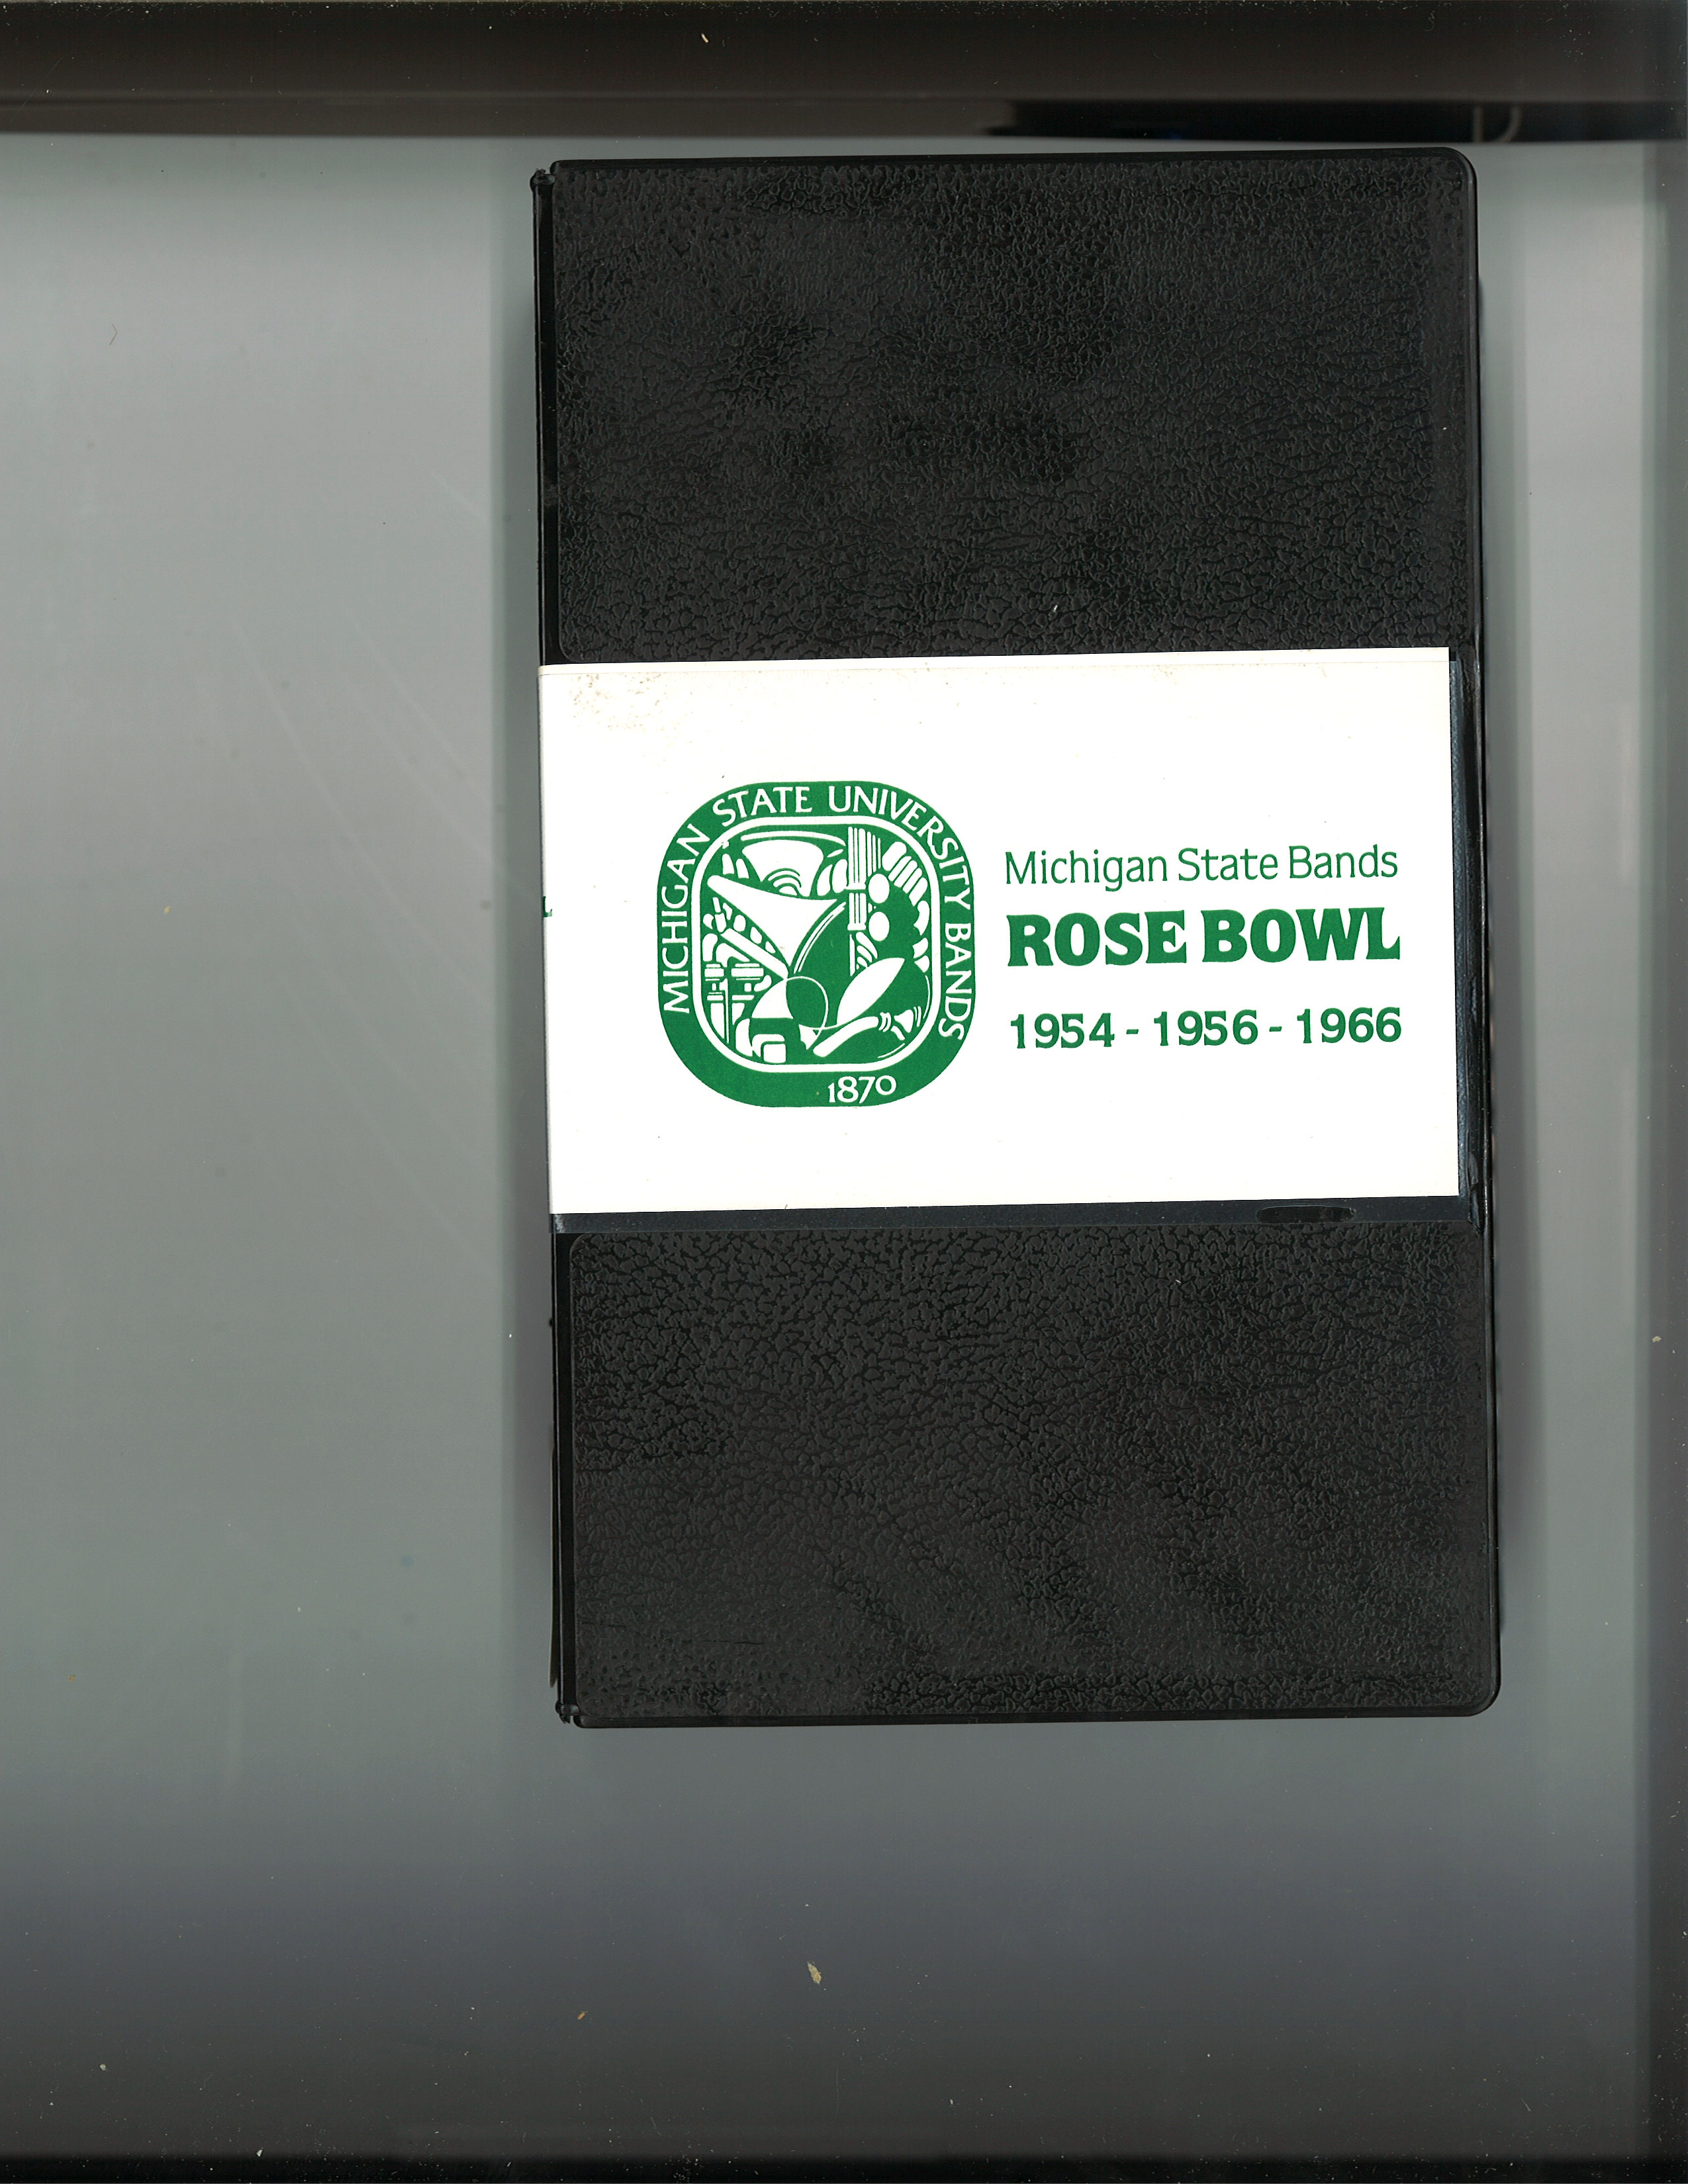 Michigan State Bands: Rose Bowls - 1954, 1956, 1966
